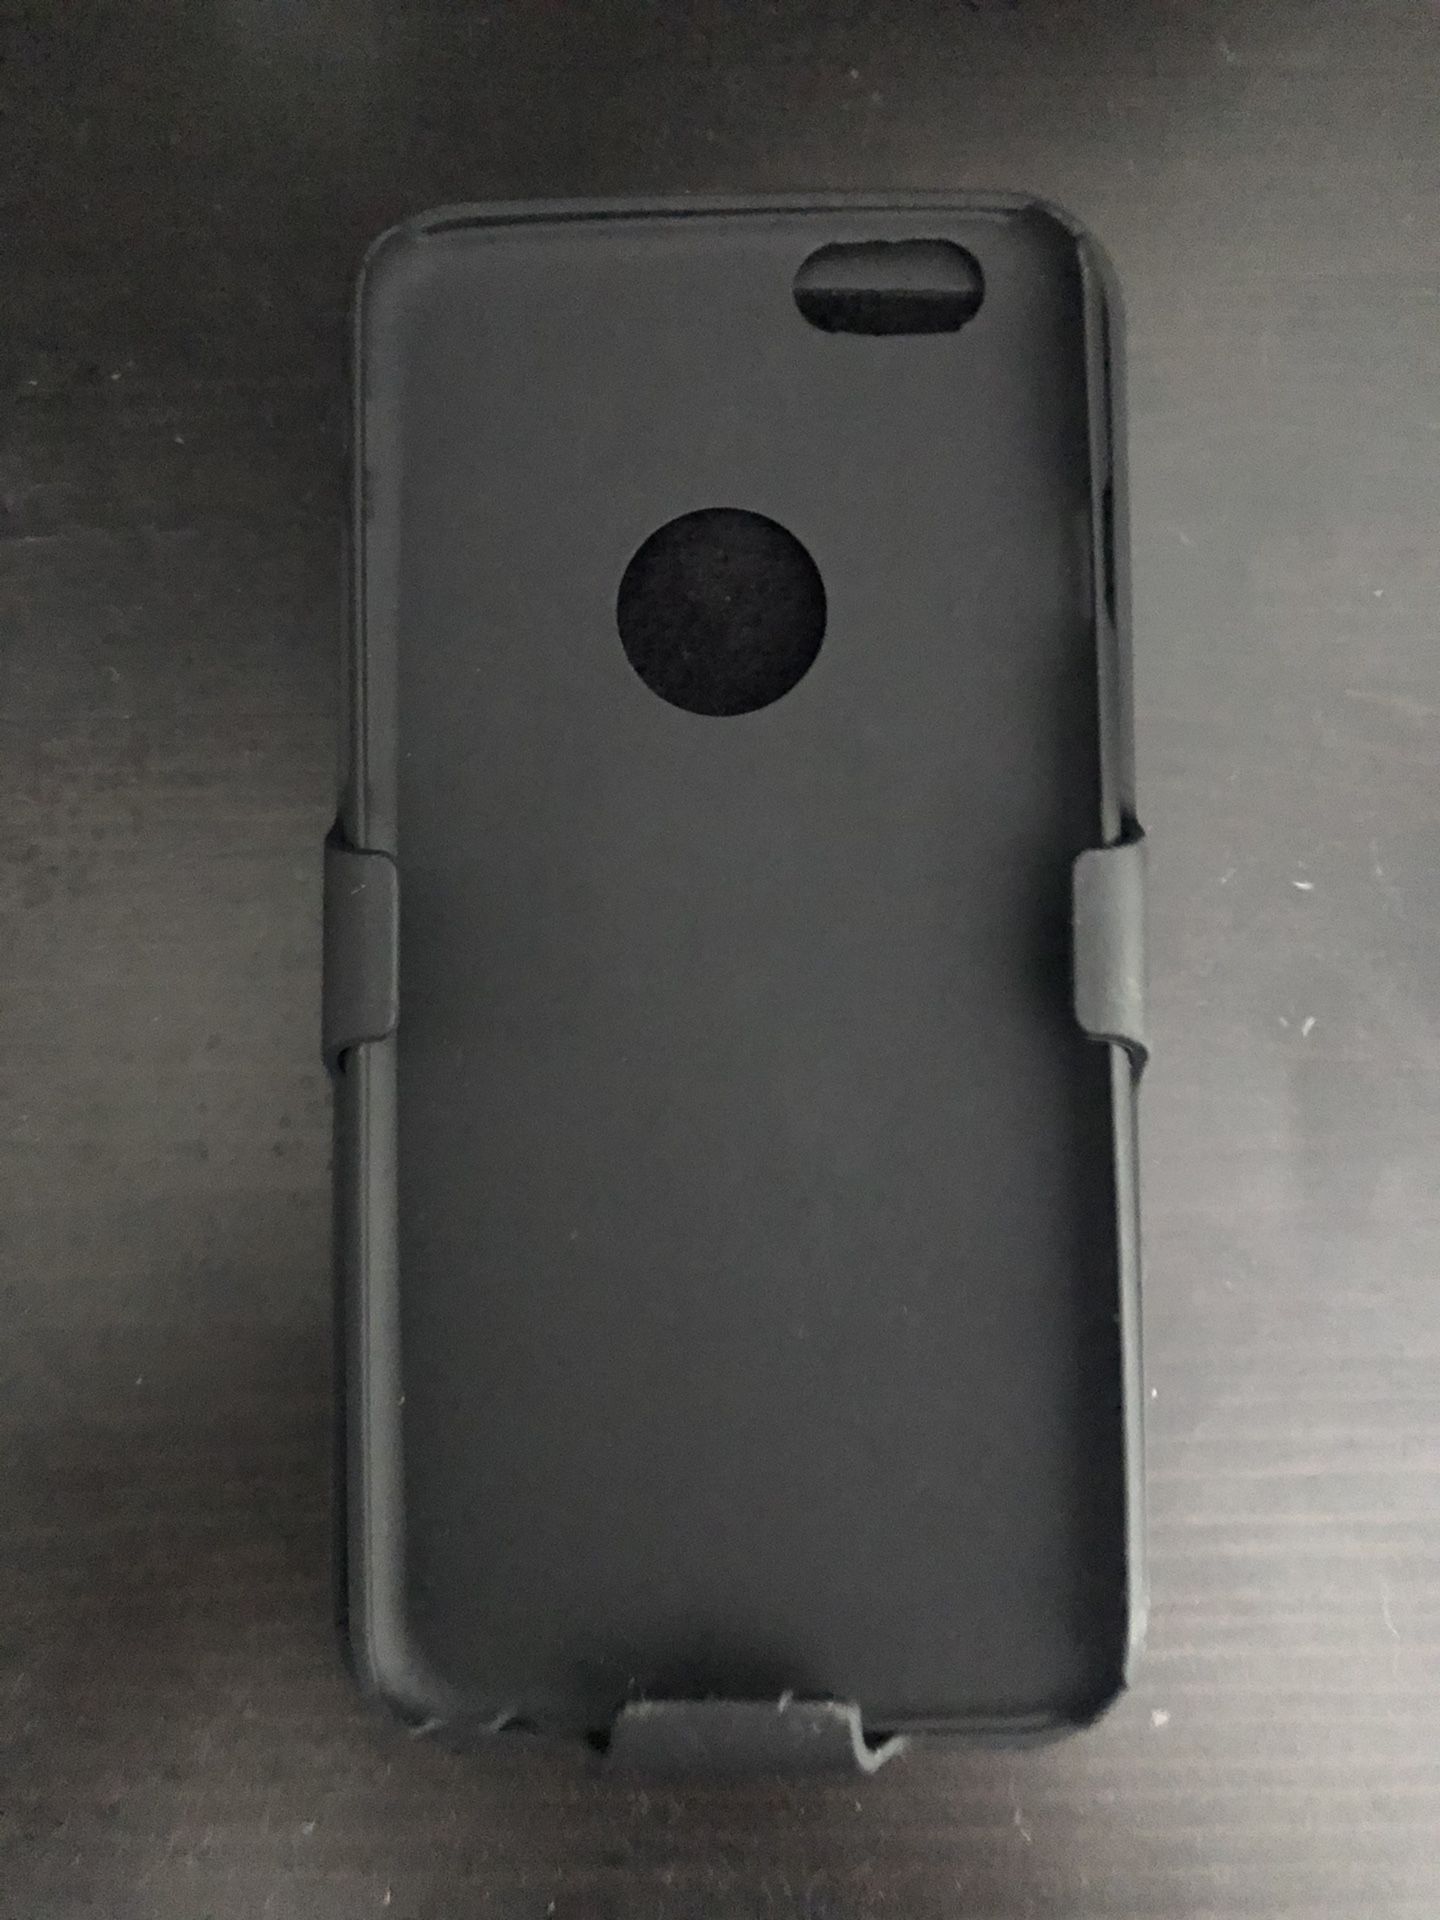 New IPhone 6 case!!